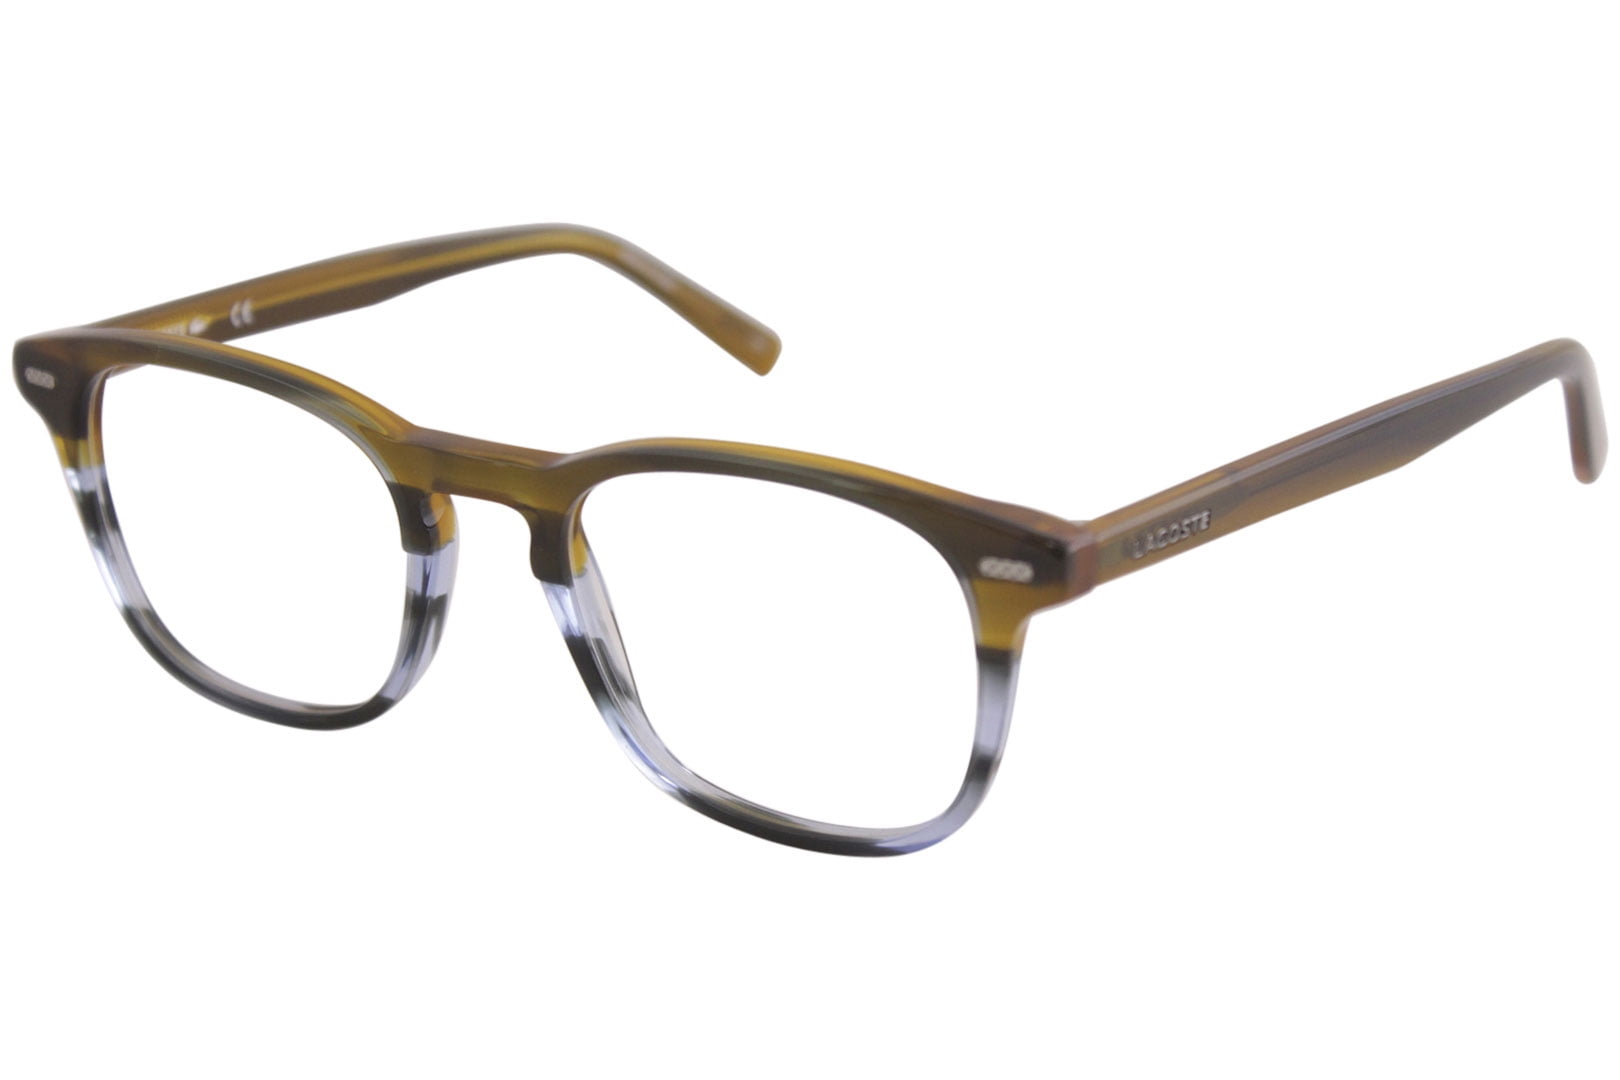 Eyeglasses LACOSTE L 2832 215 STRIPED BROWN/BLUE